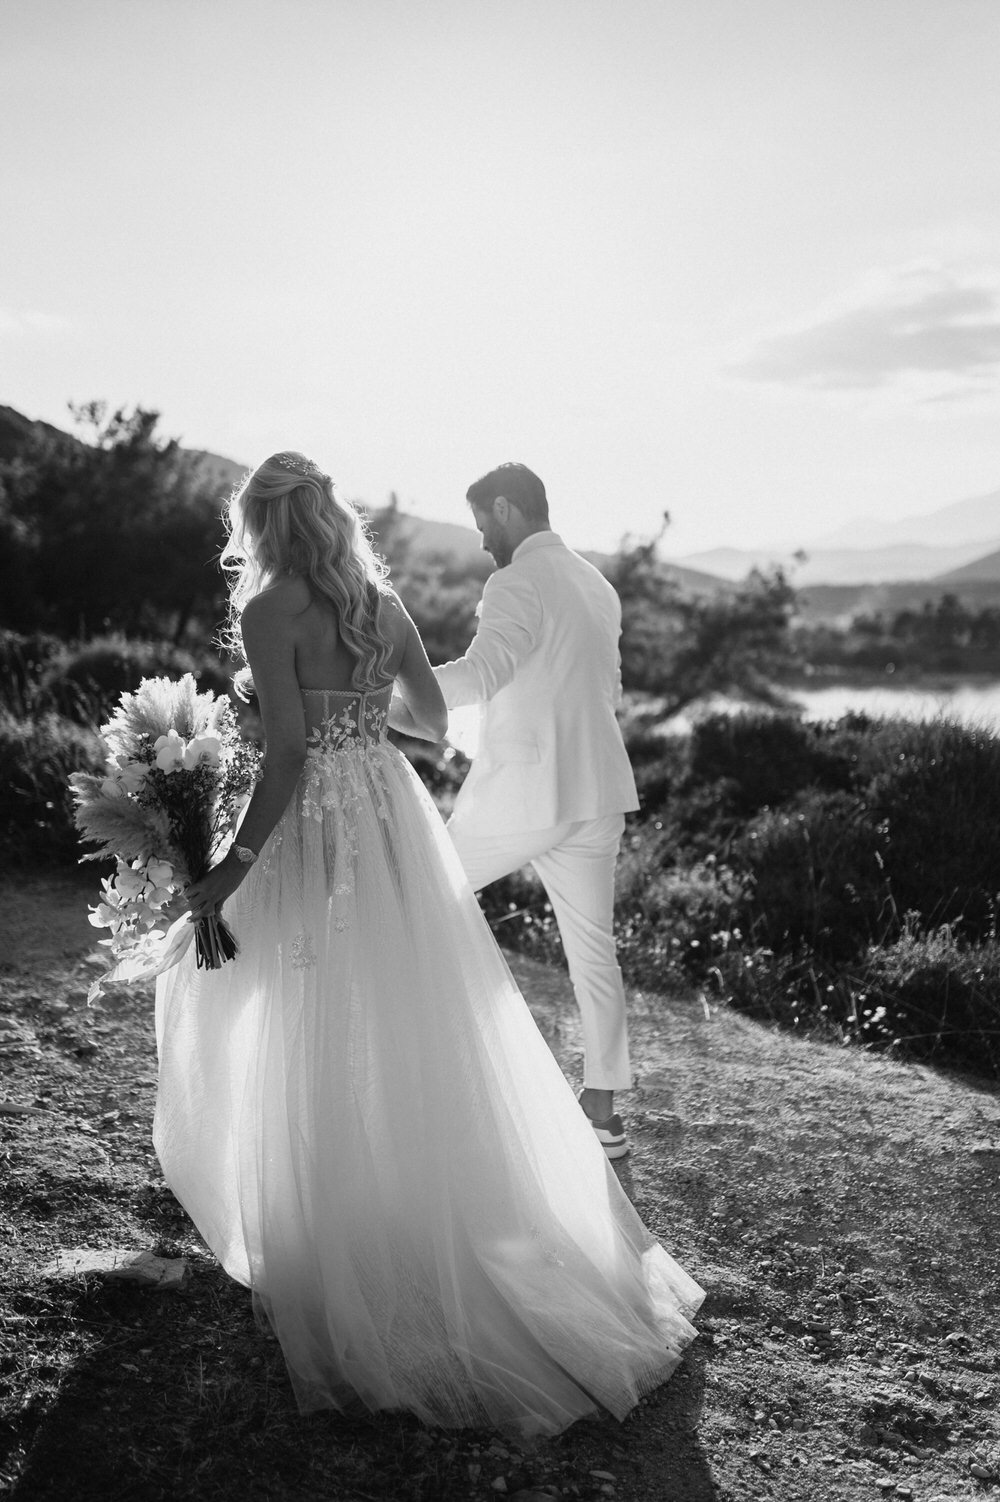 Professional wedding photography in Santorini, Greece by Albatross